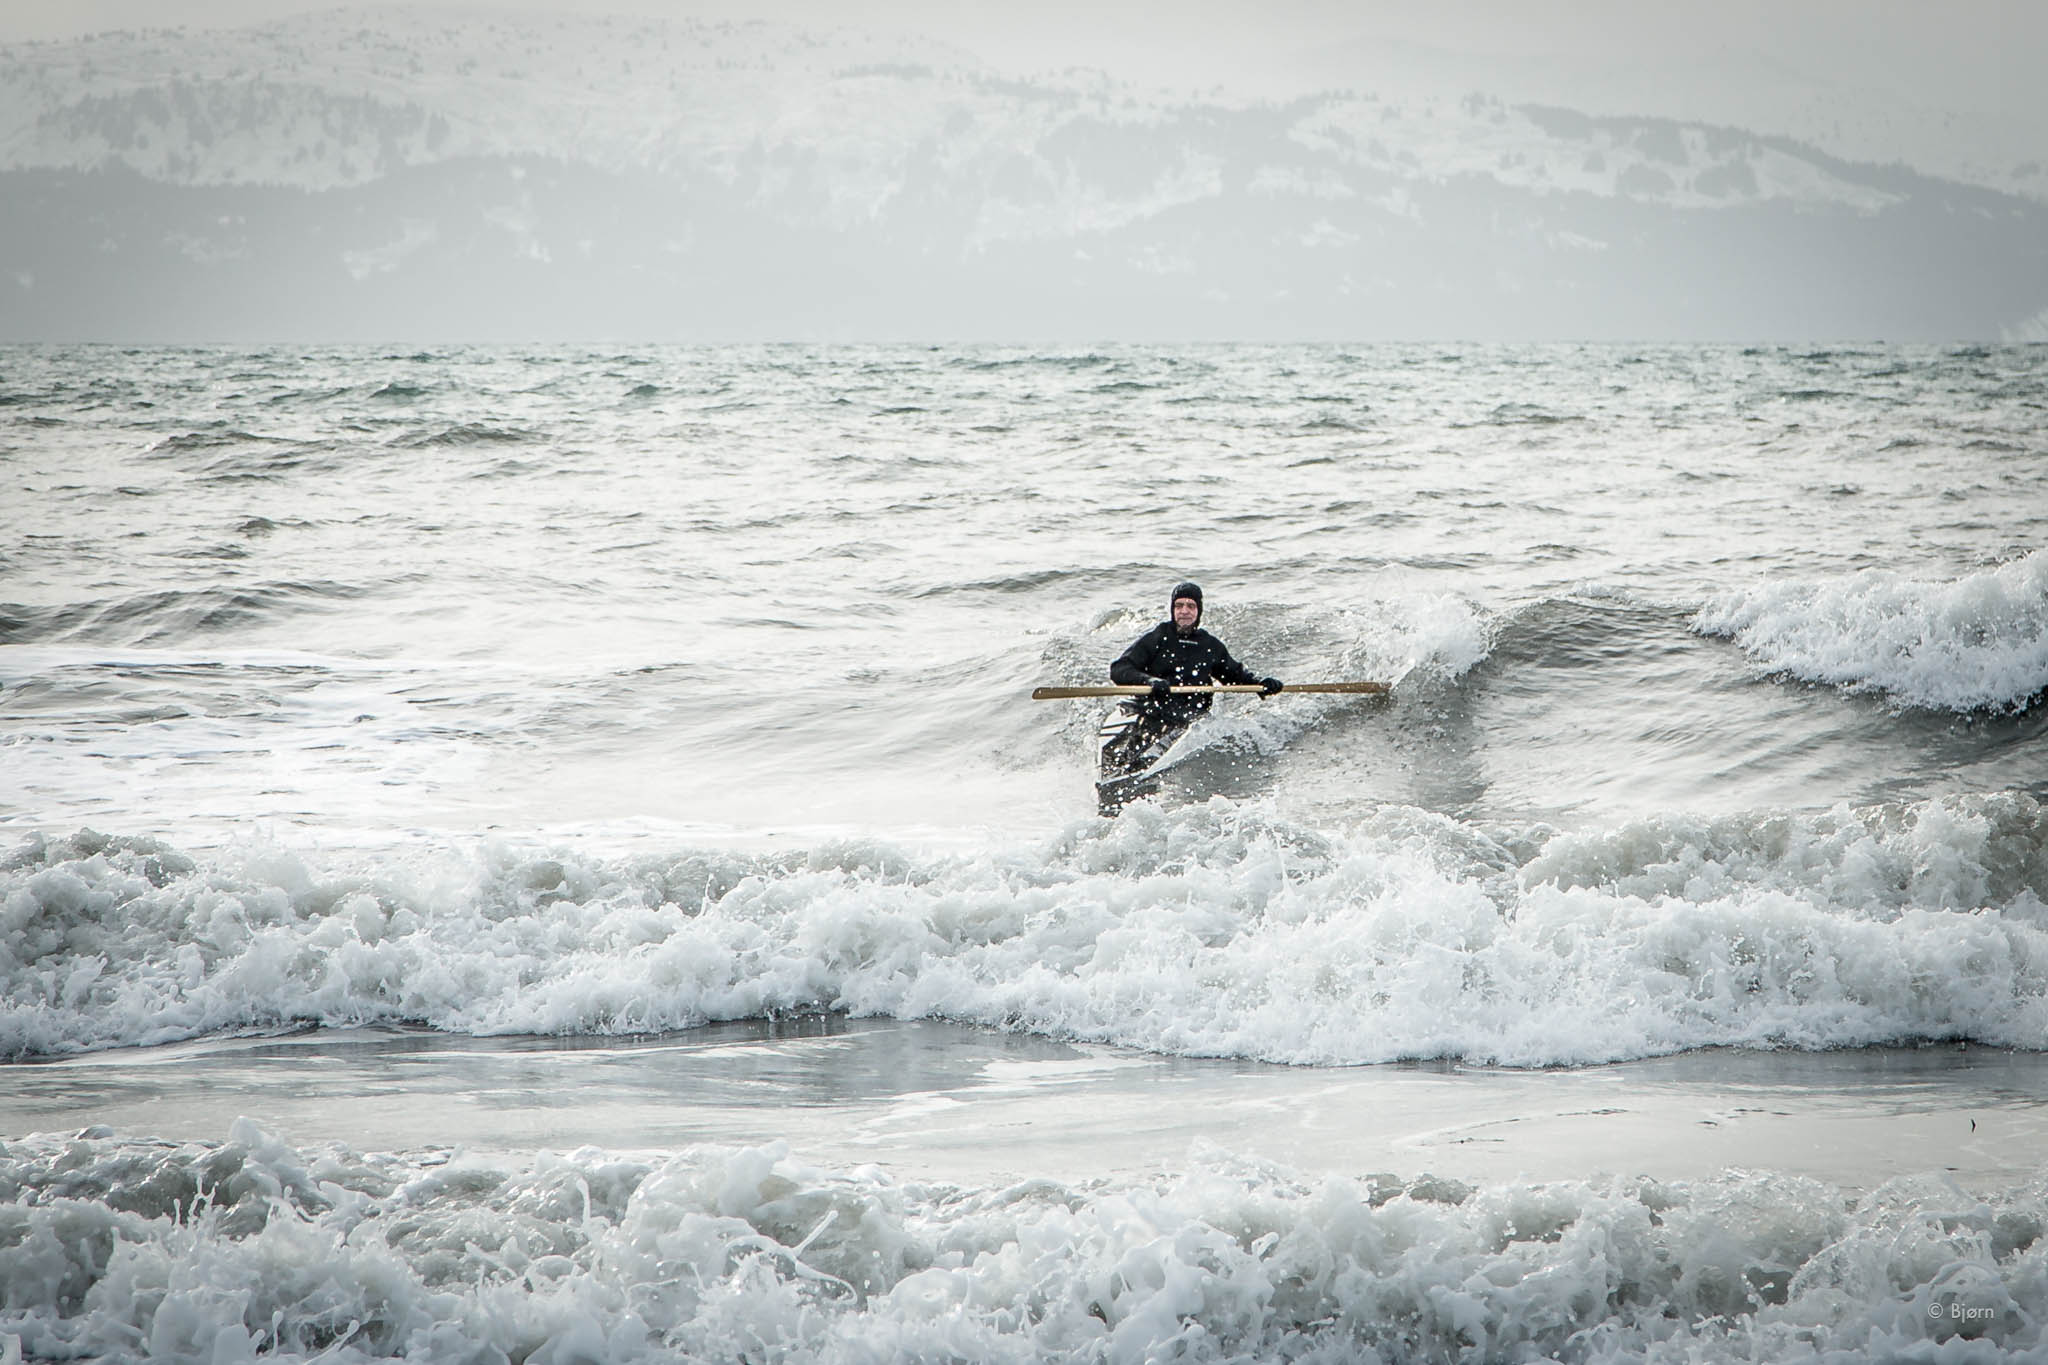  Bjørn surfing his traditional qayaq - Homer.&nbsp; 